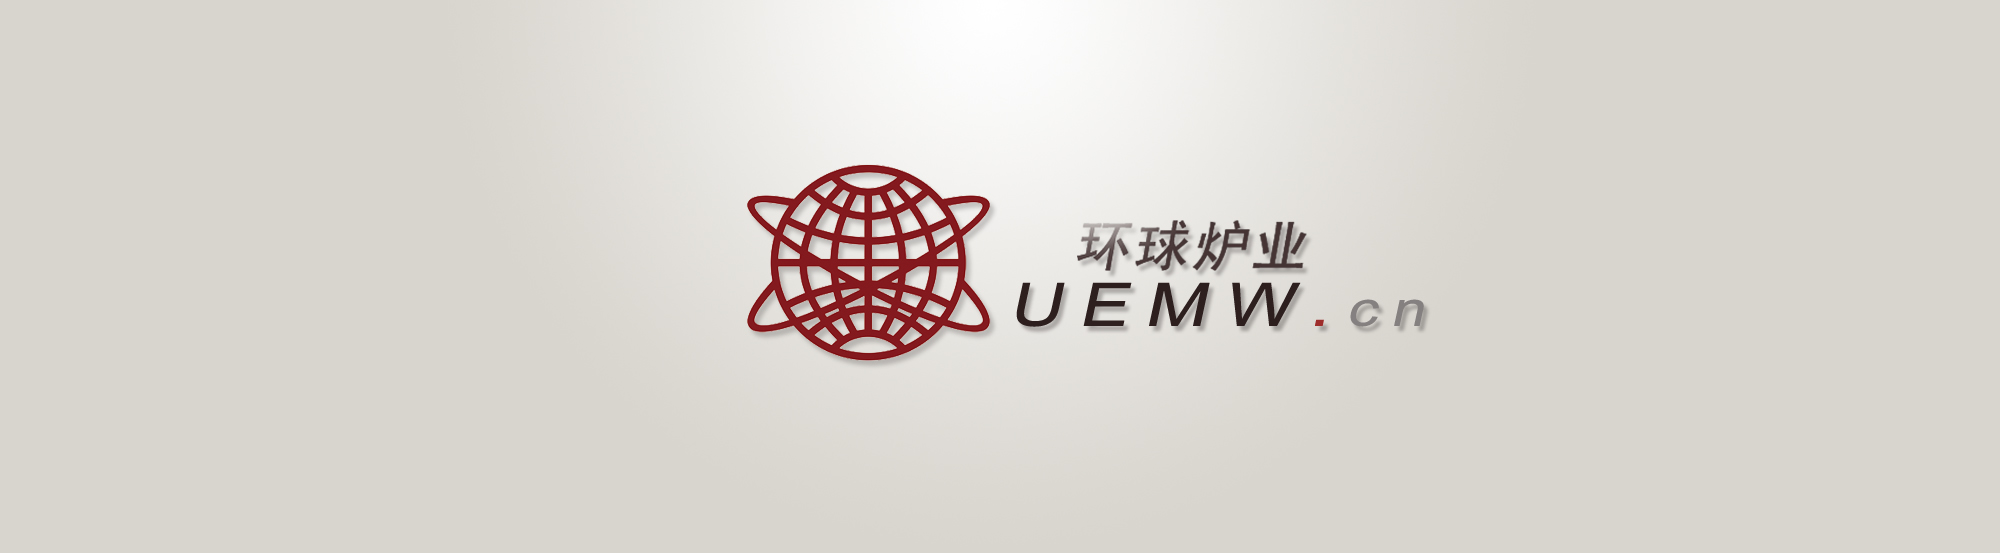 UNIVERSAL Electrical Machine Works Co. Ltd.